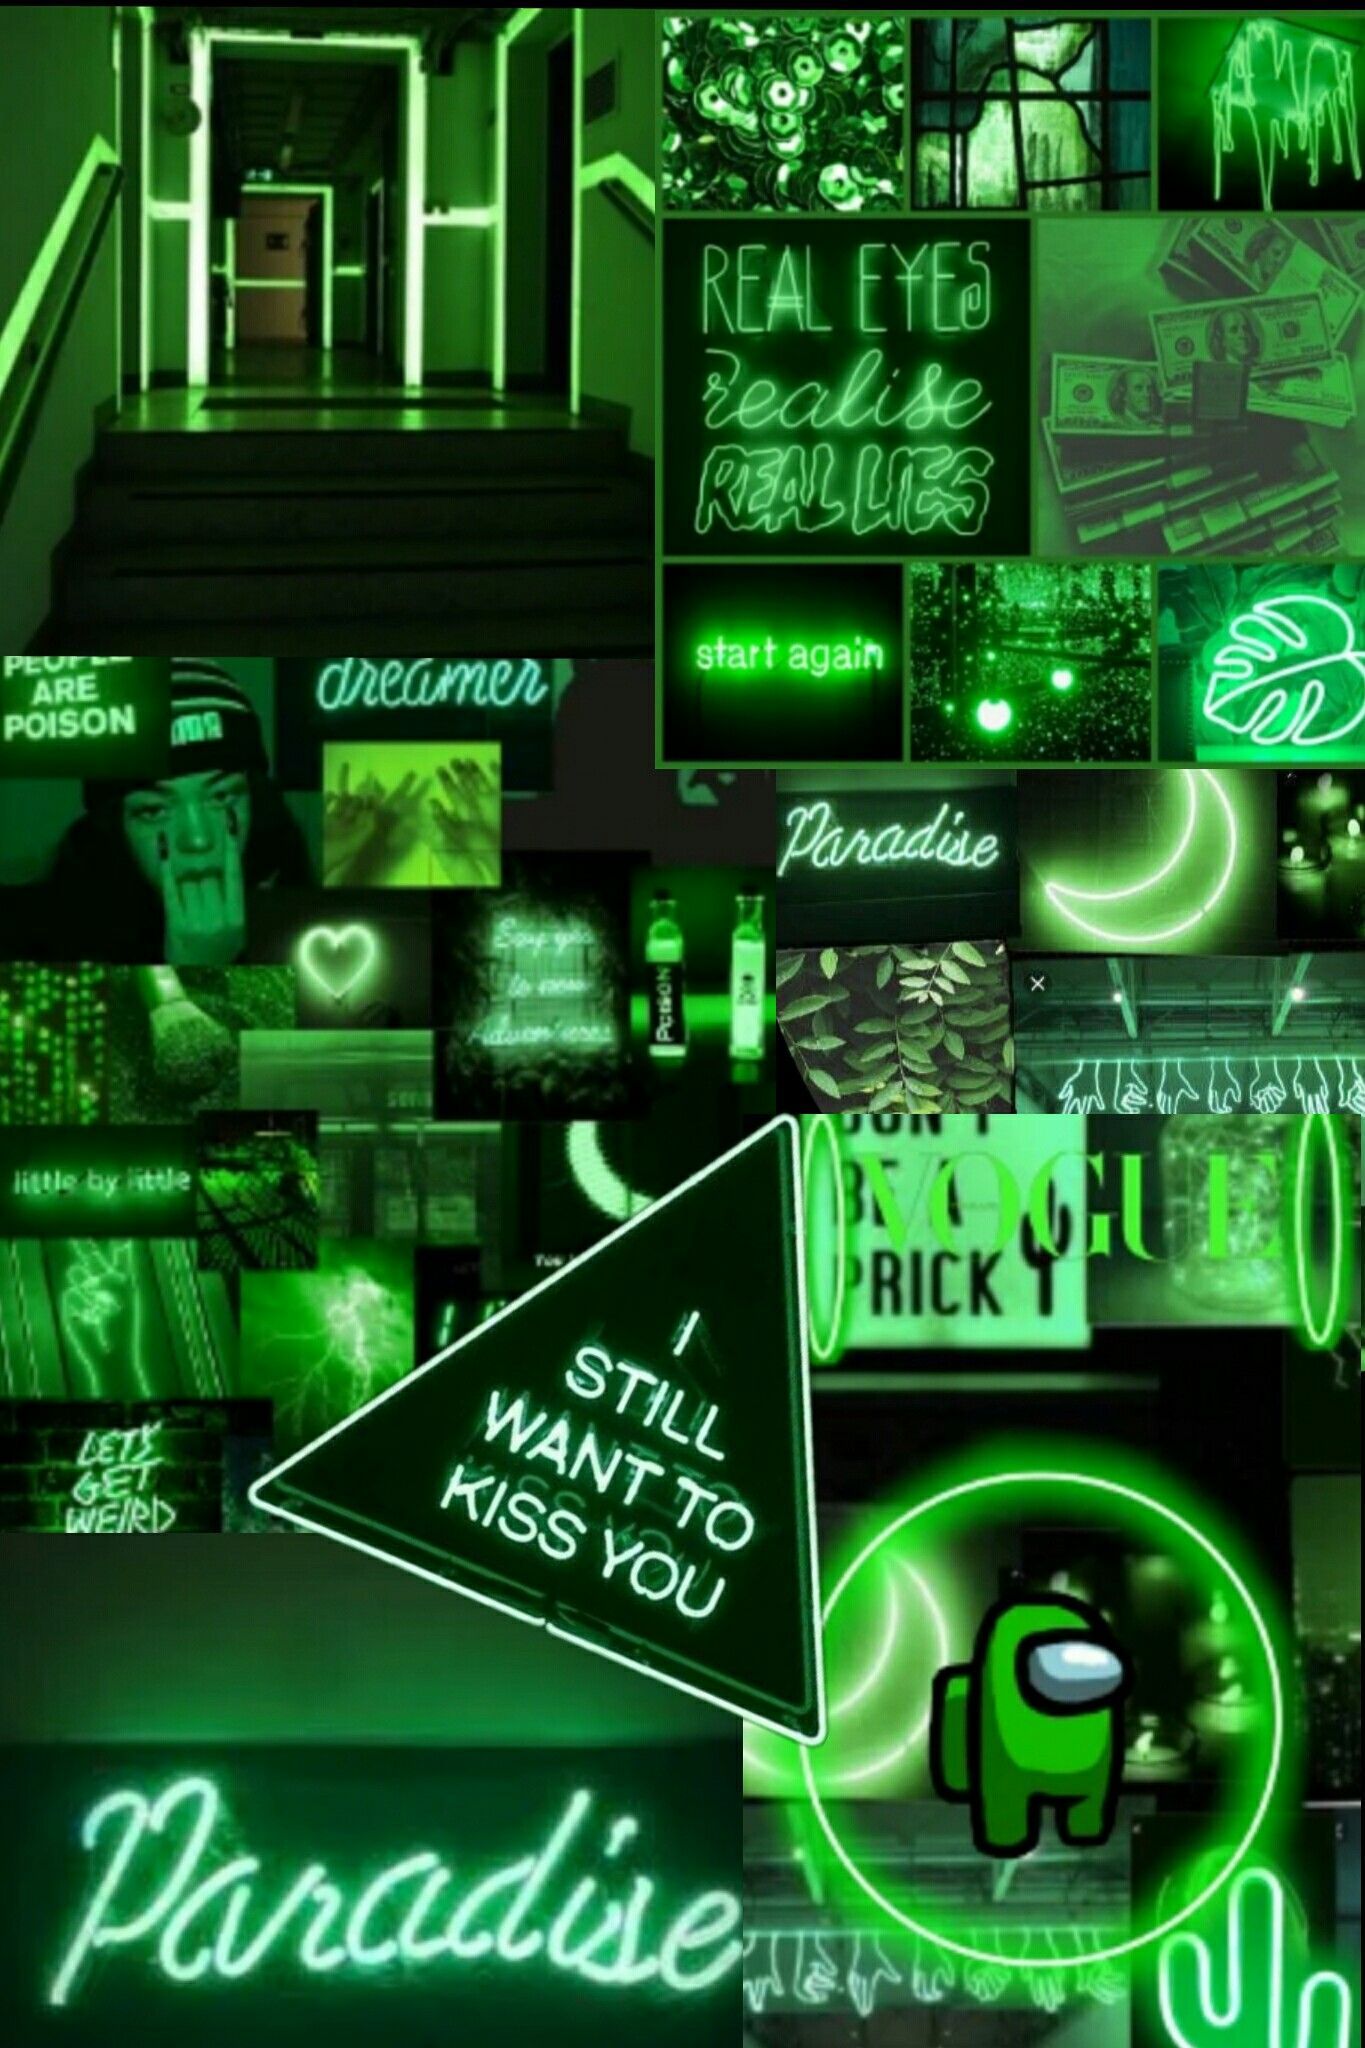 Neon green aesthetic wallpaper. paradise. Cool wallpaper for phones, Green aesthetic, The dreamers